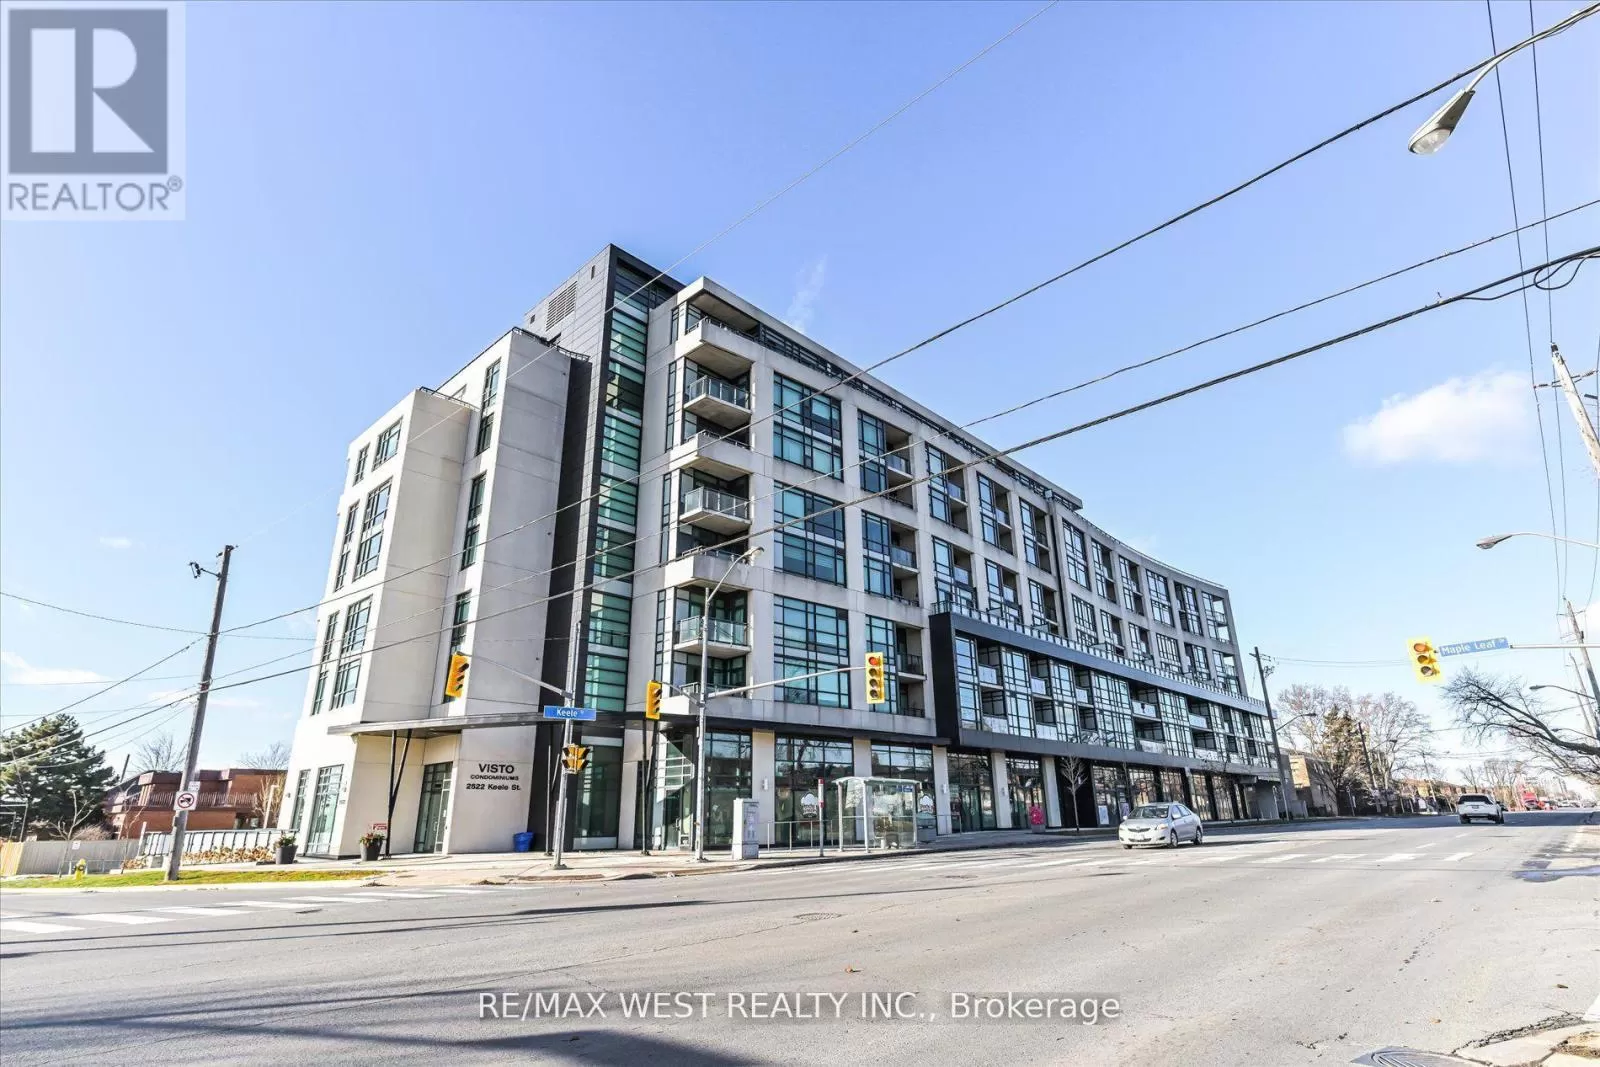 Apartment for rent: 618 - 2522 Keele Street, Toronto, Ontario M6L 0A2